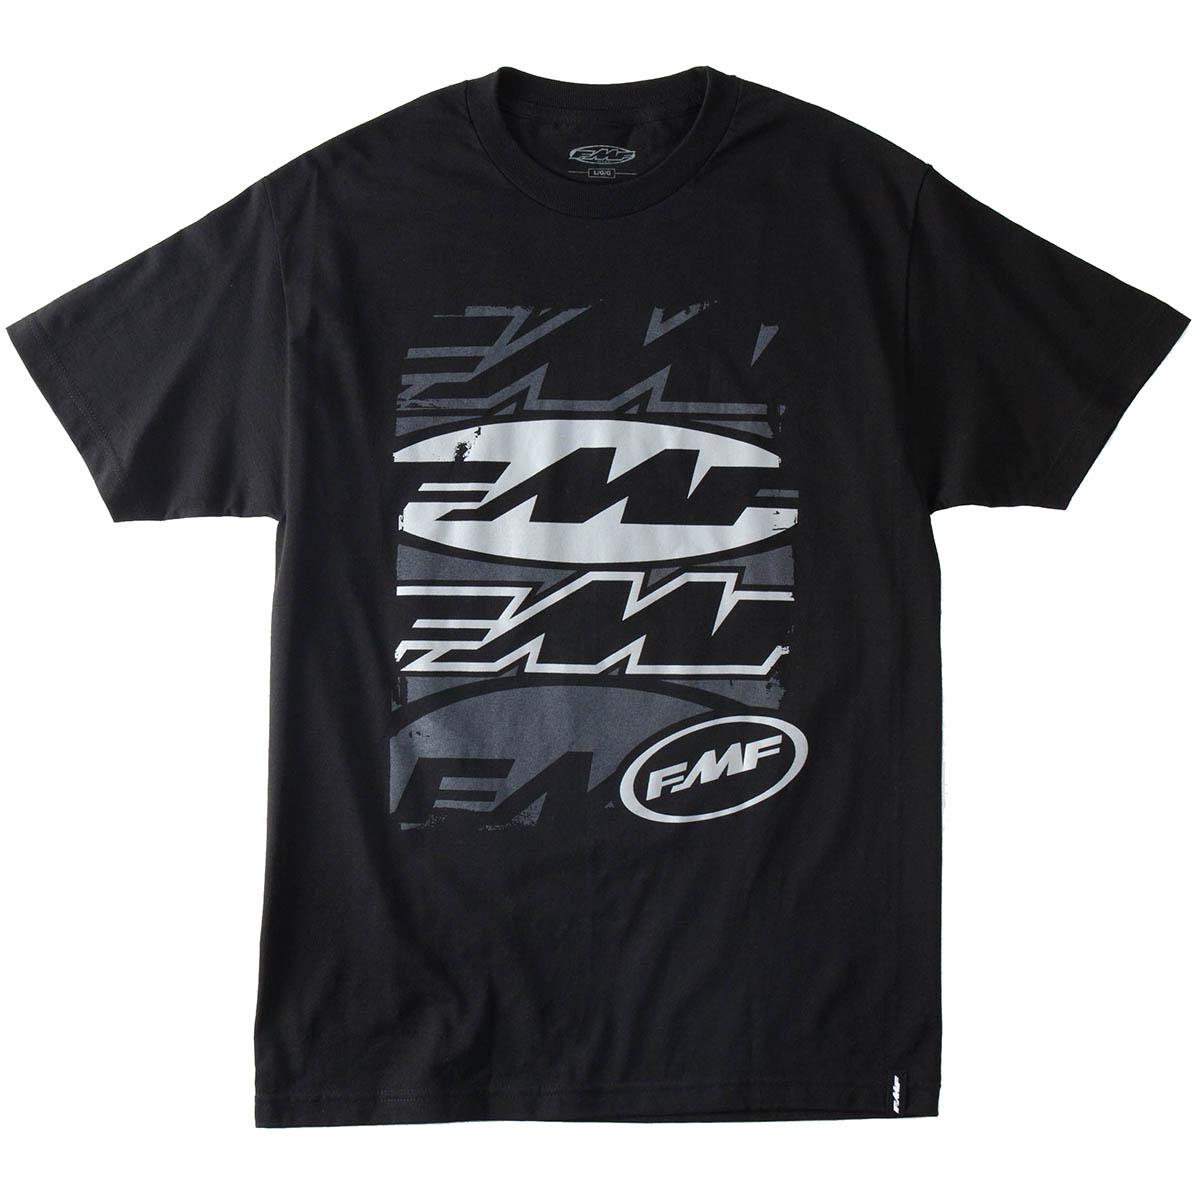 Fmf apparel rip it t-shirt motorcycle shirts